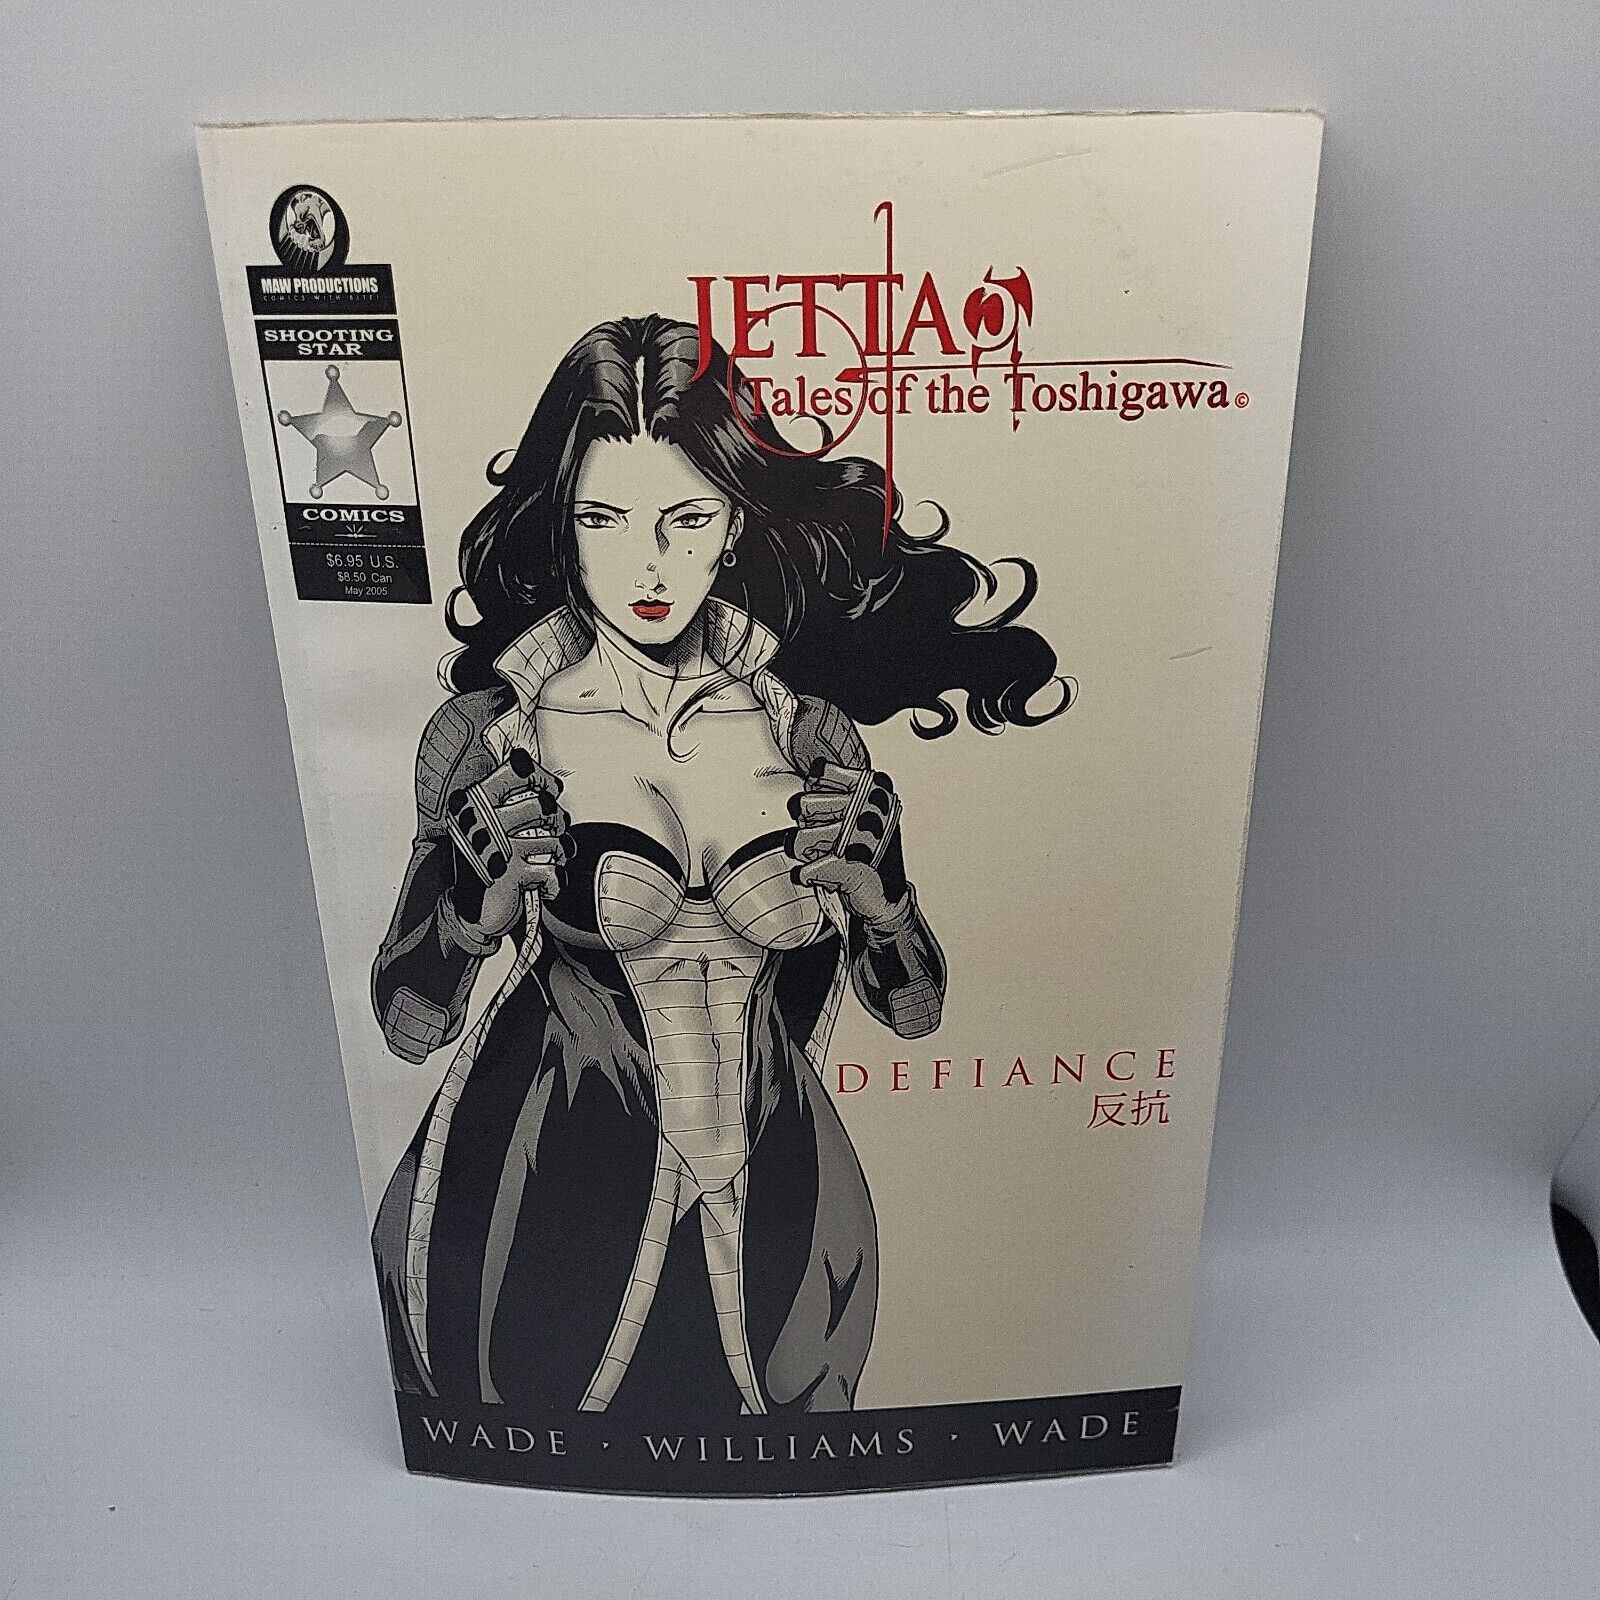 Jetta Tales of the Toshigawa Comic Graphic Novel Paperback